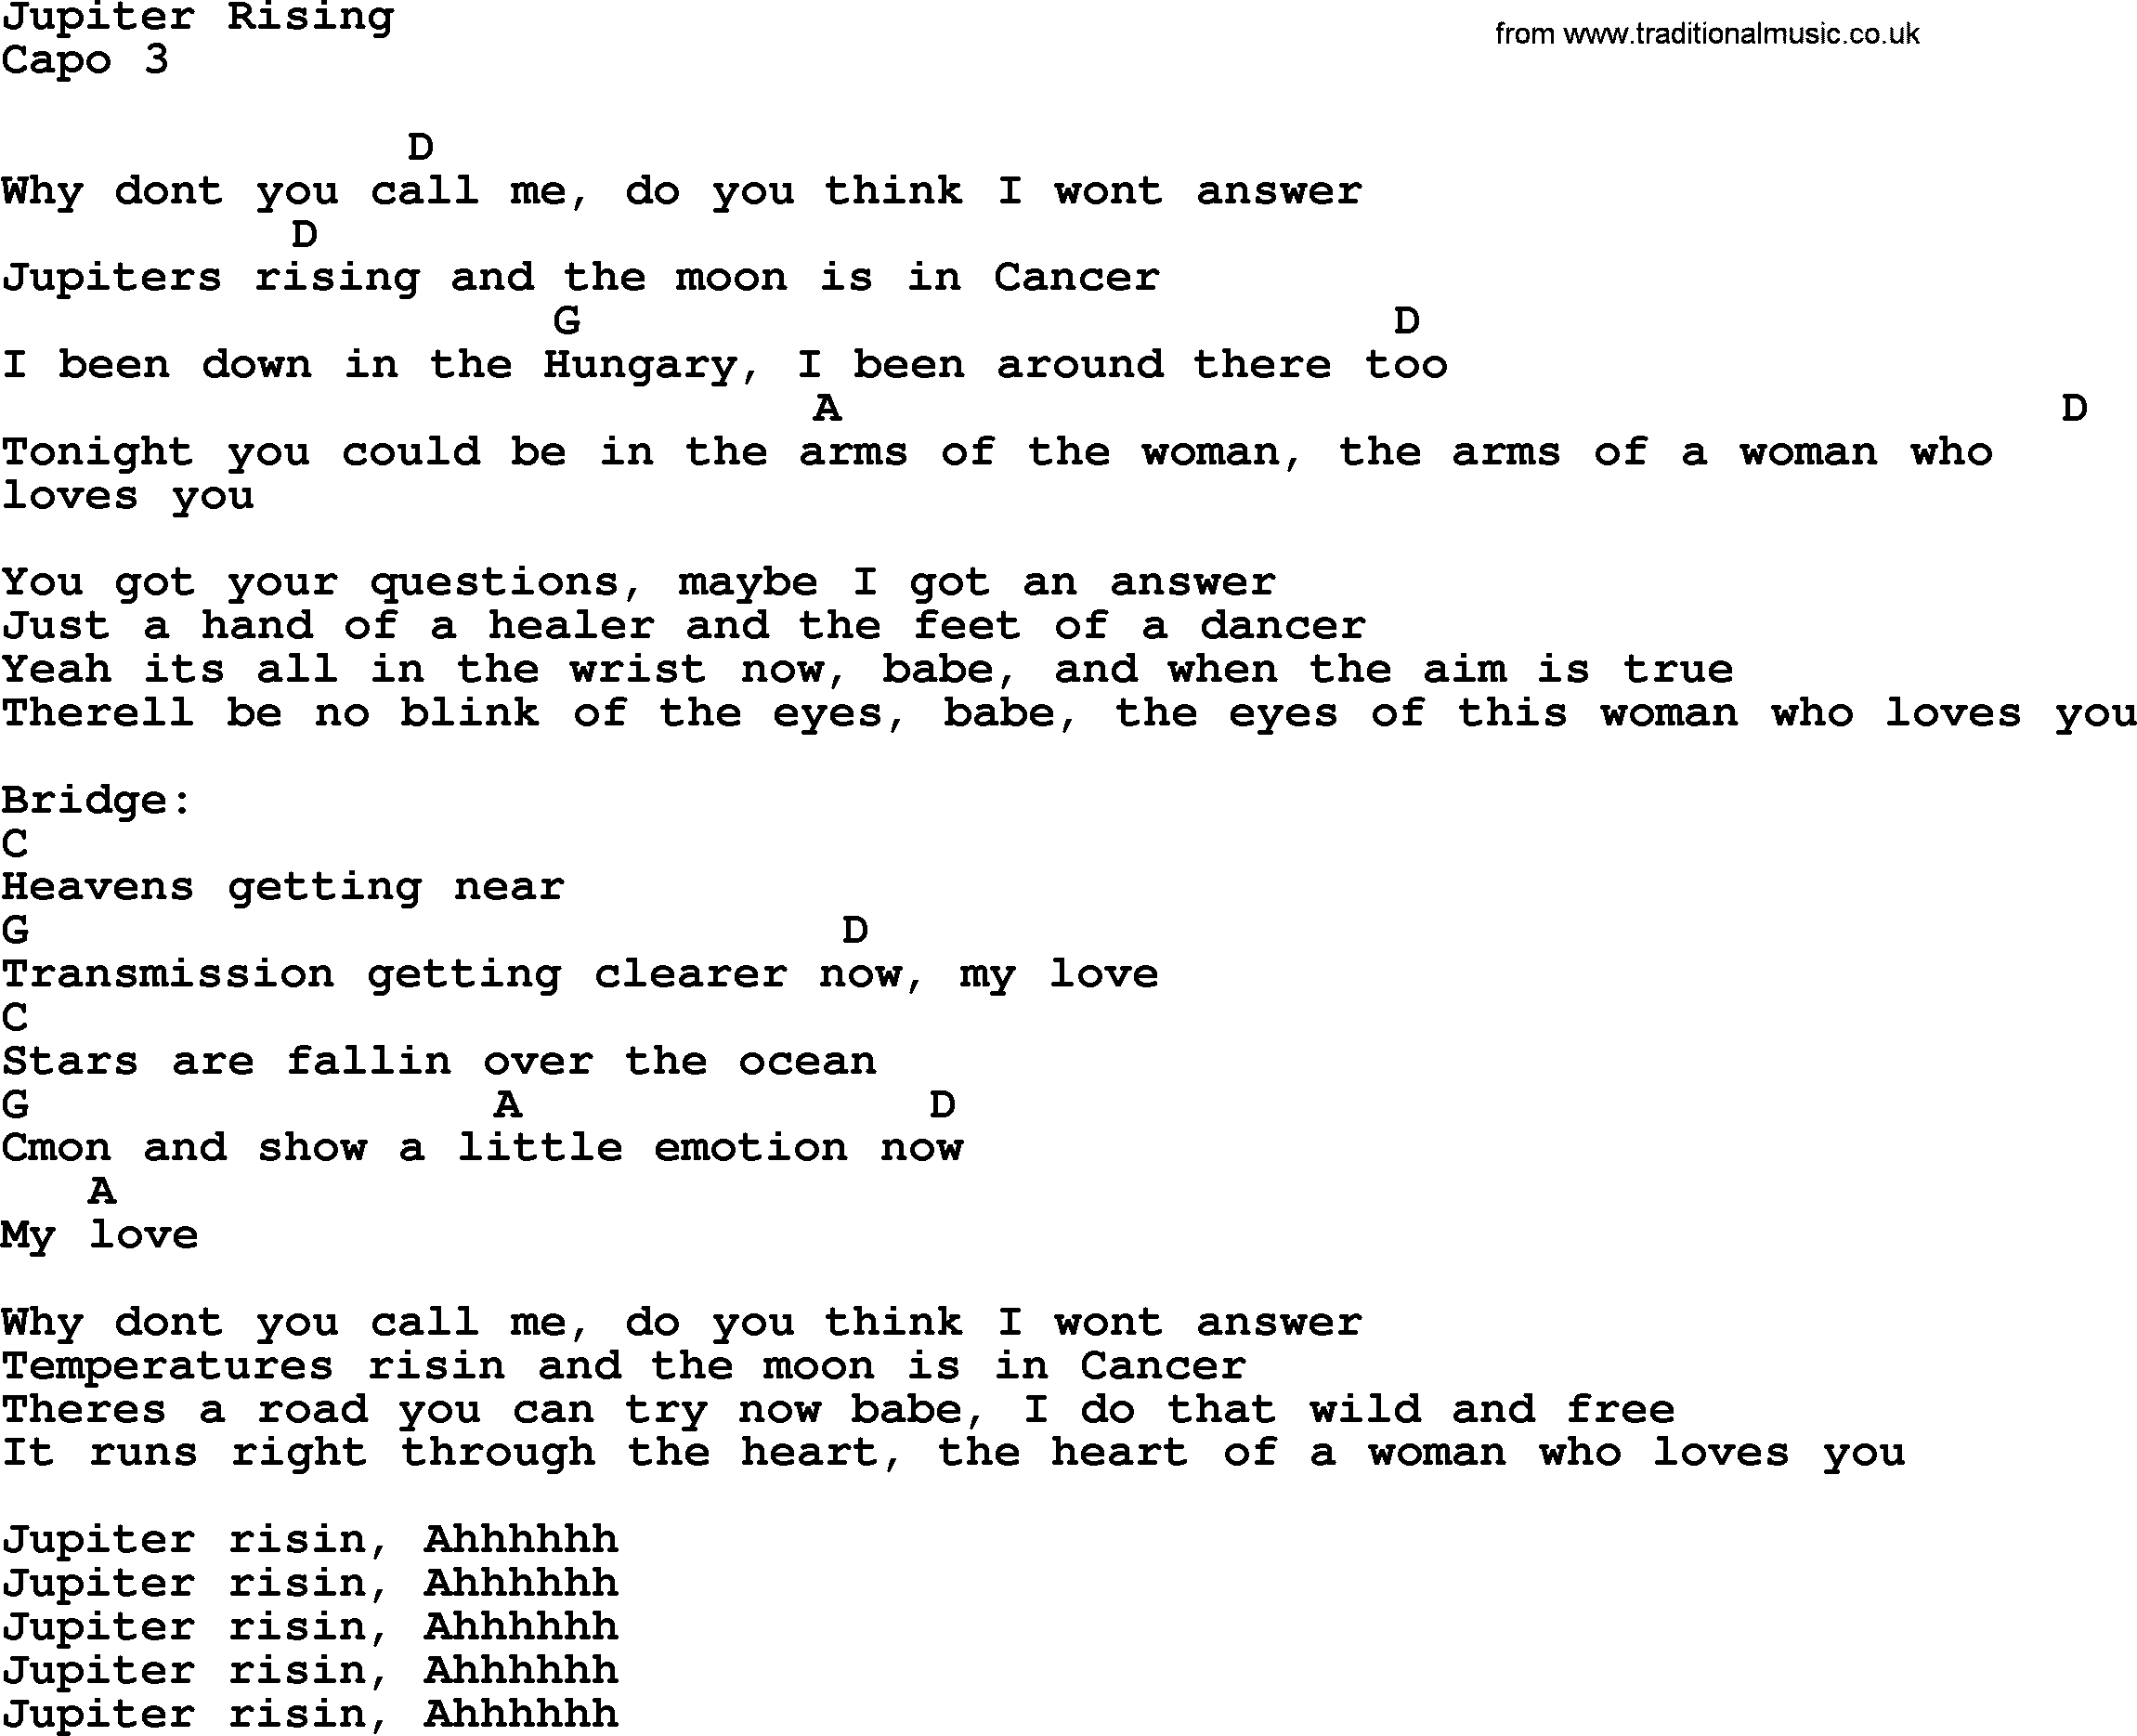 Emmylou Harris song: Jupiter Rising lyrics and chords